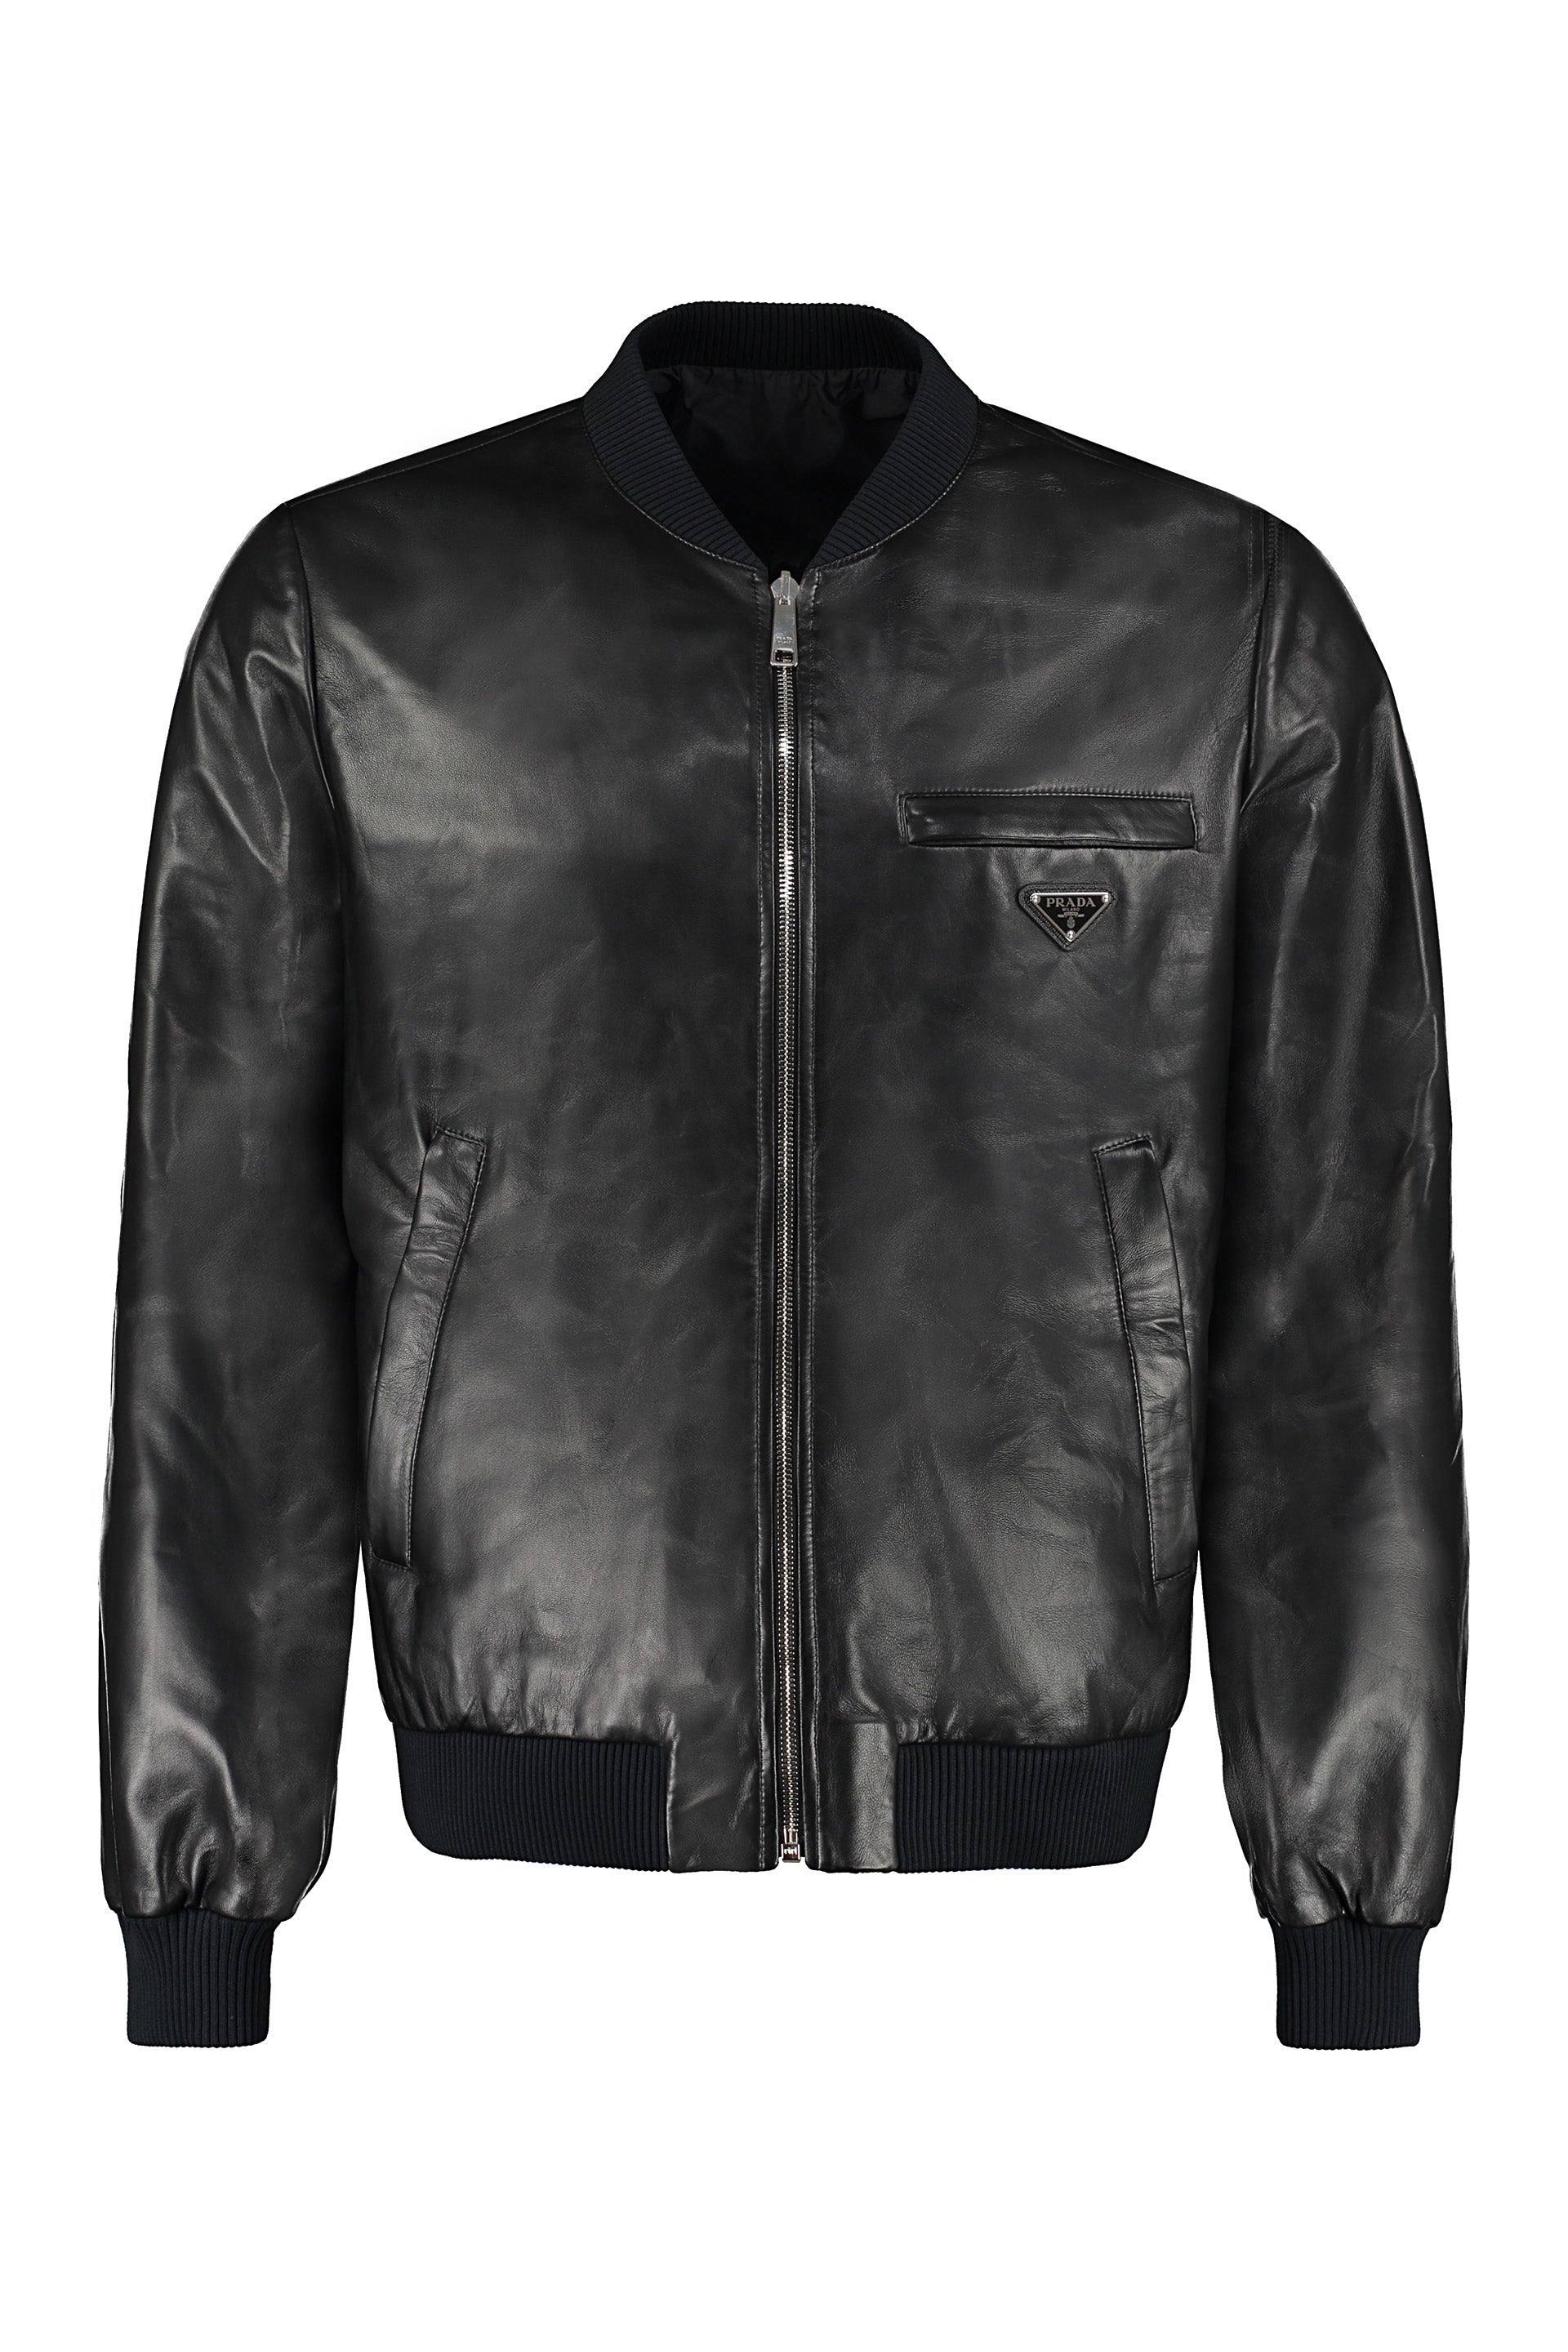 Prada - Re-Nylon and leather reversible bomber jacket black - The Corner